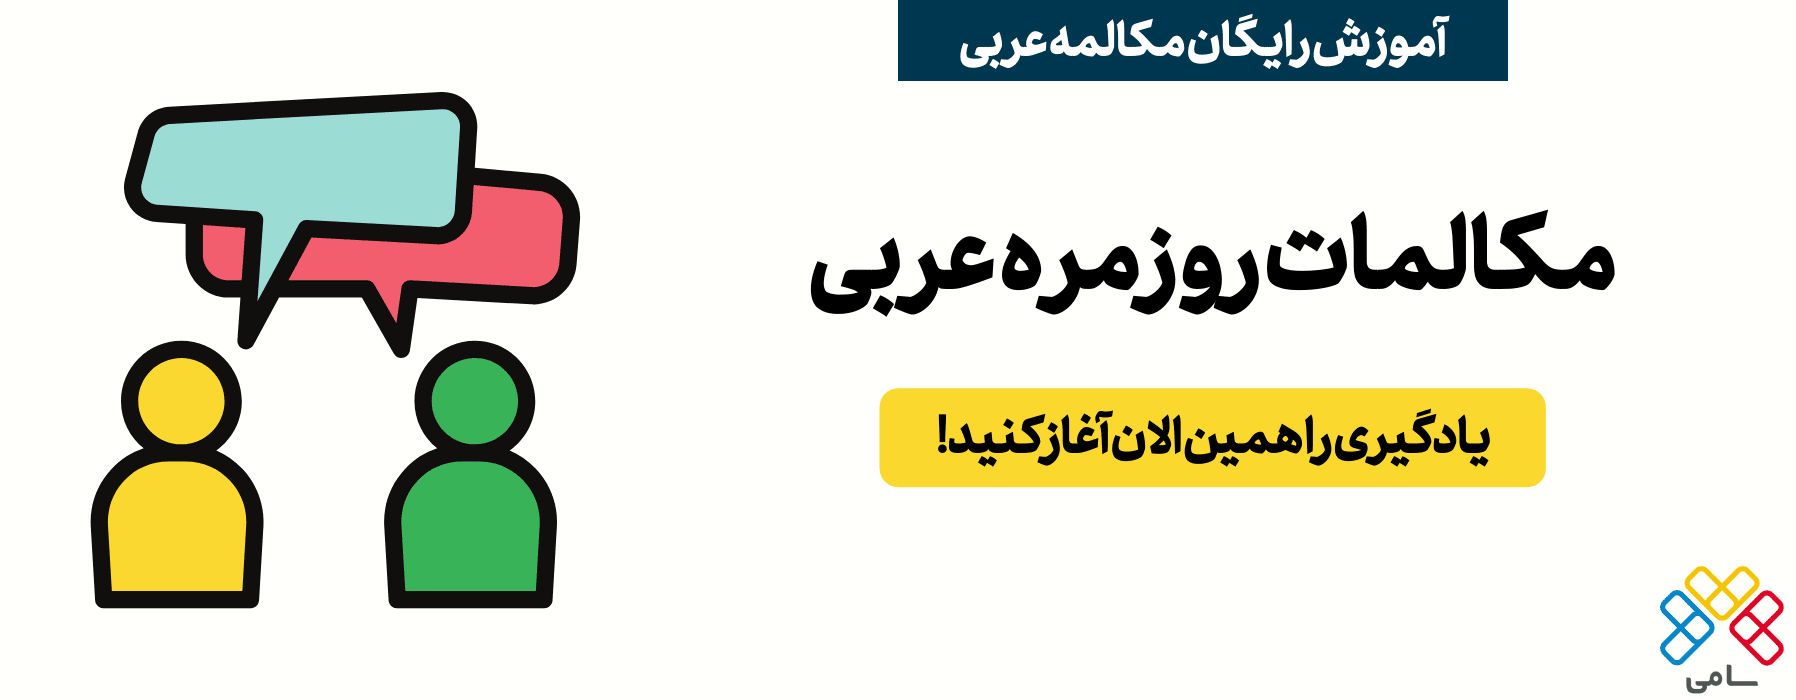 مکالمات روزمره عربی